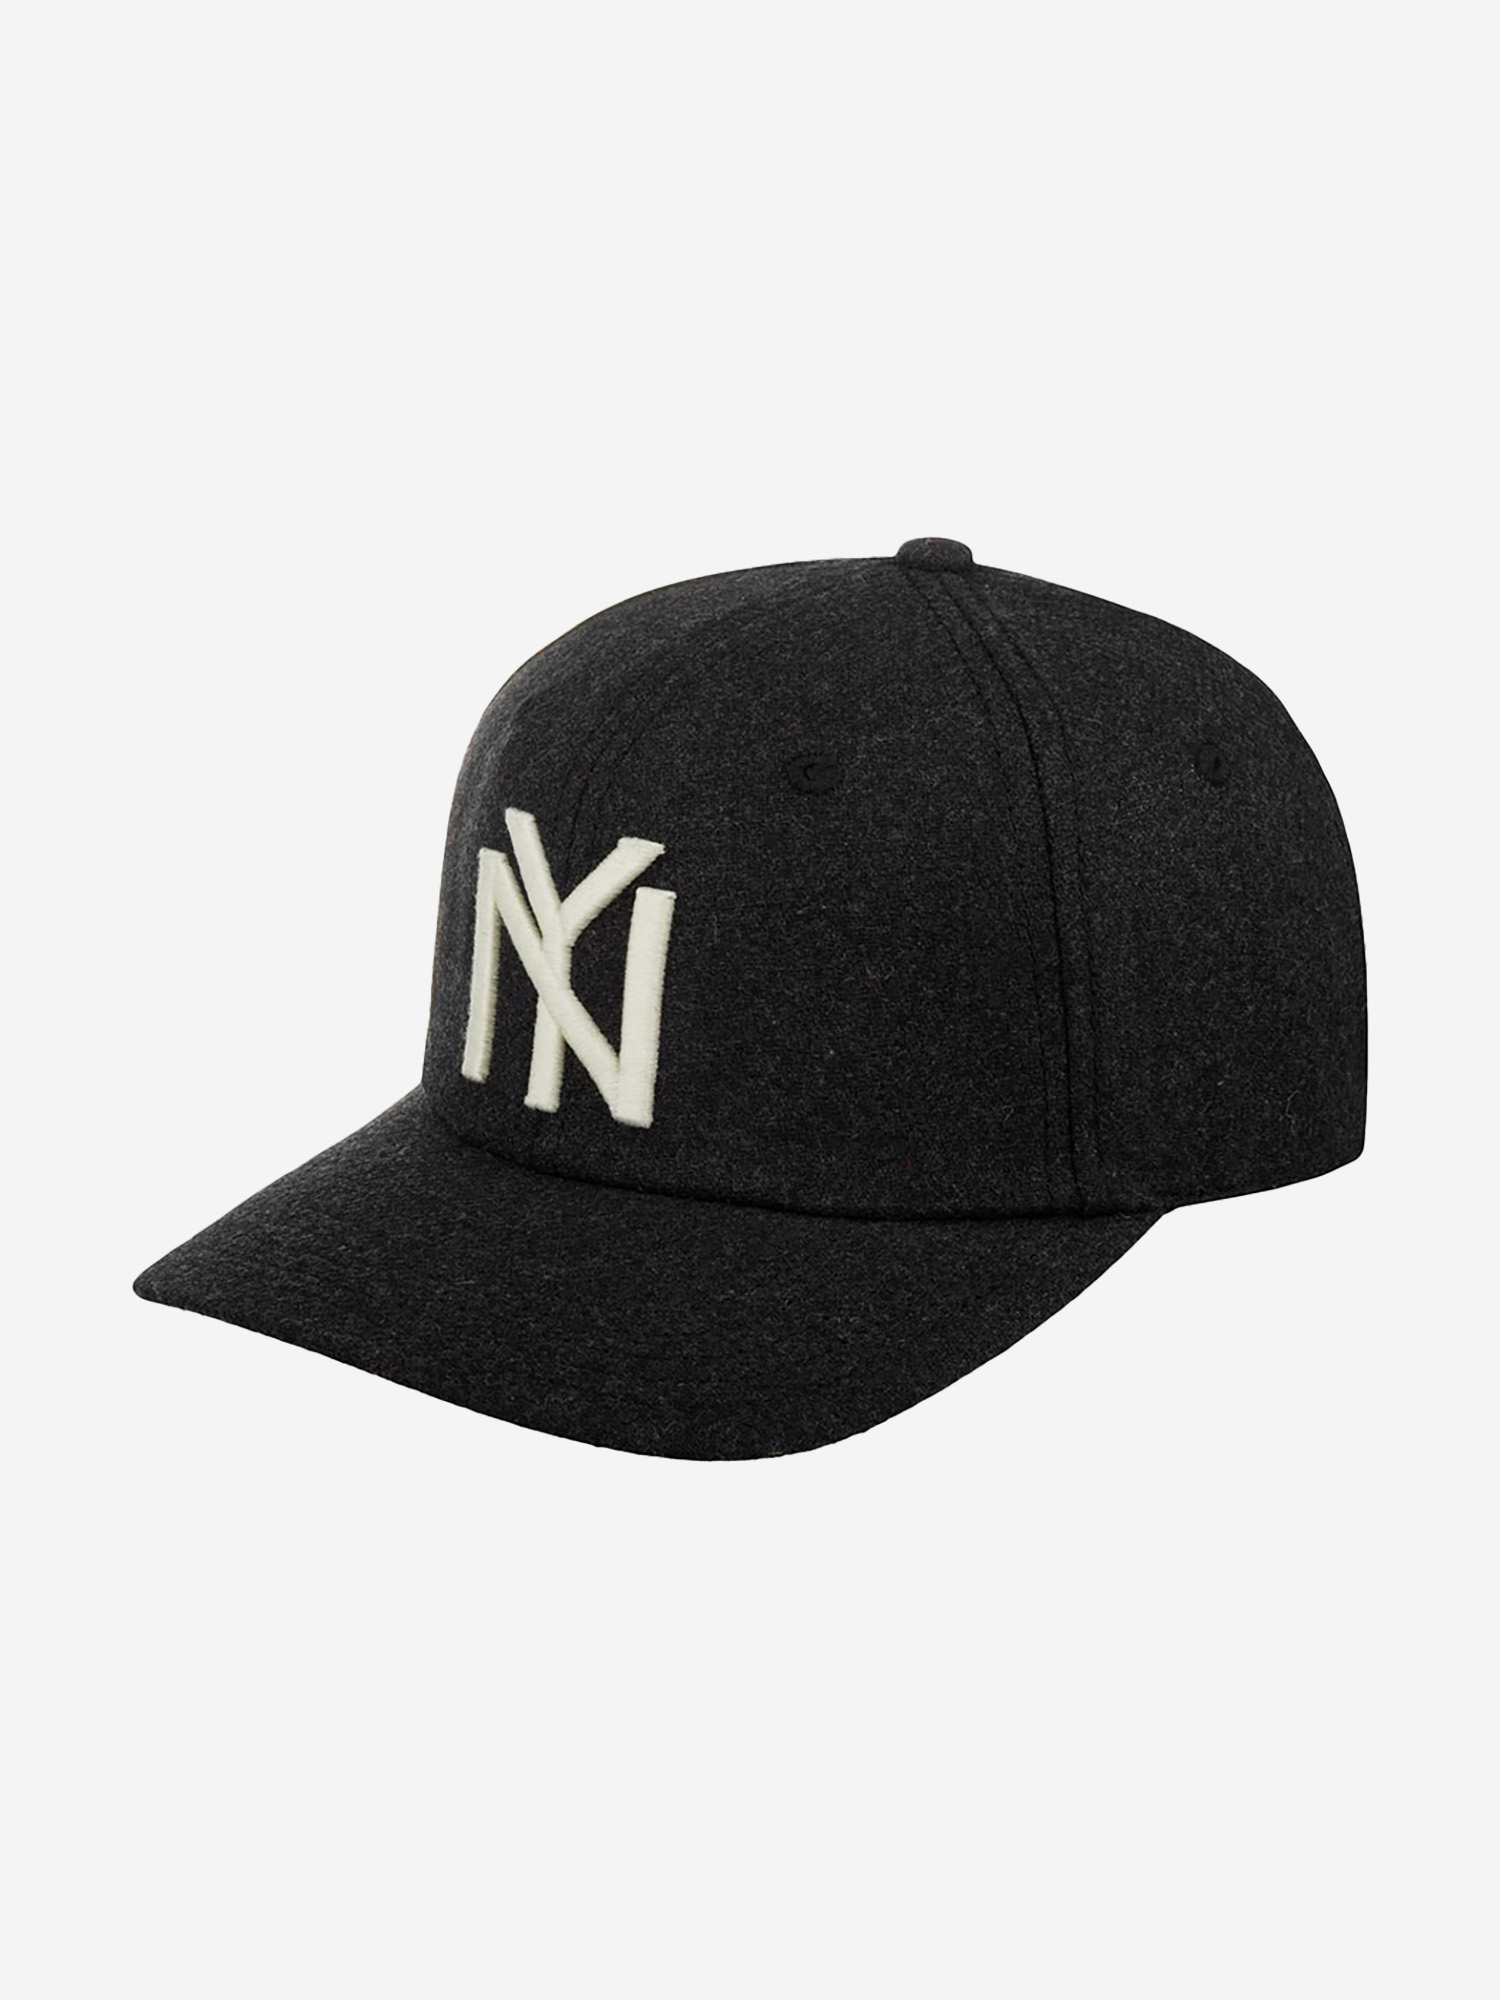 Бейсболка AMERICAN NEEDLE 21005A-NBY New York Black Yankees Archive Legend NL (черный), Черный шапка с отворотом american needle 21019a nby new york black yankees cuffed knit nl